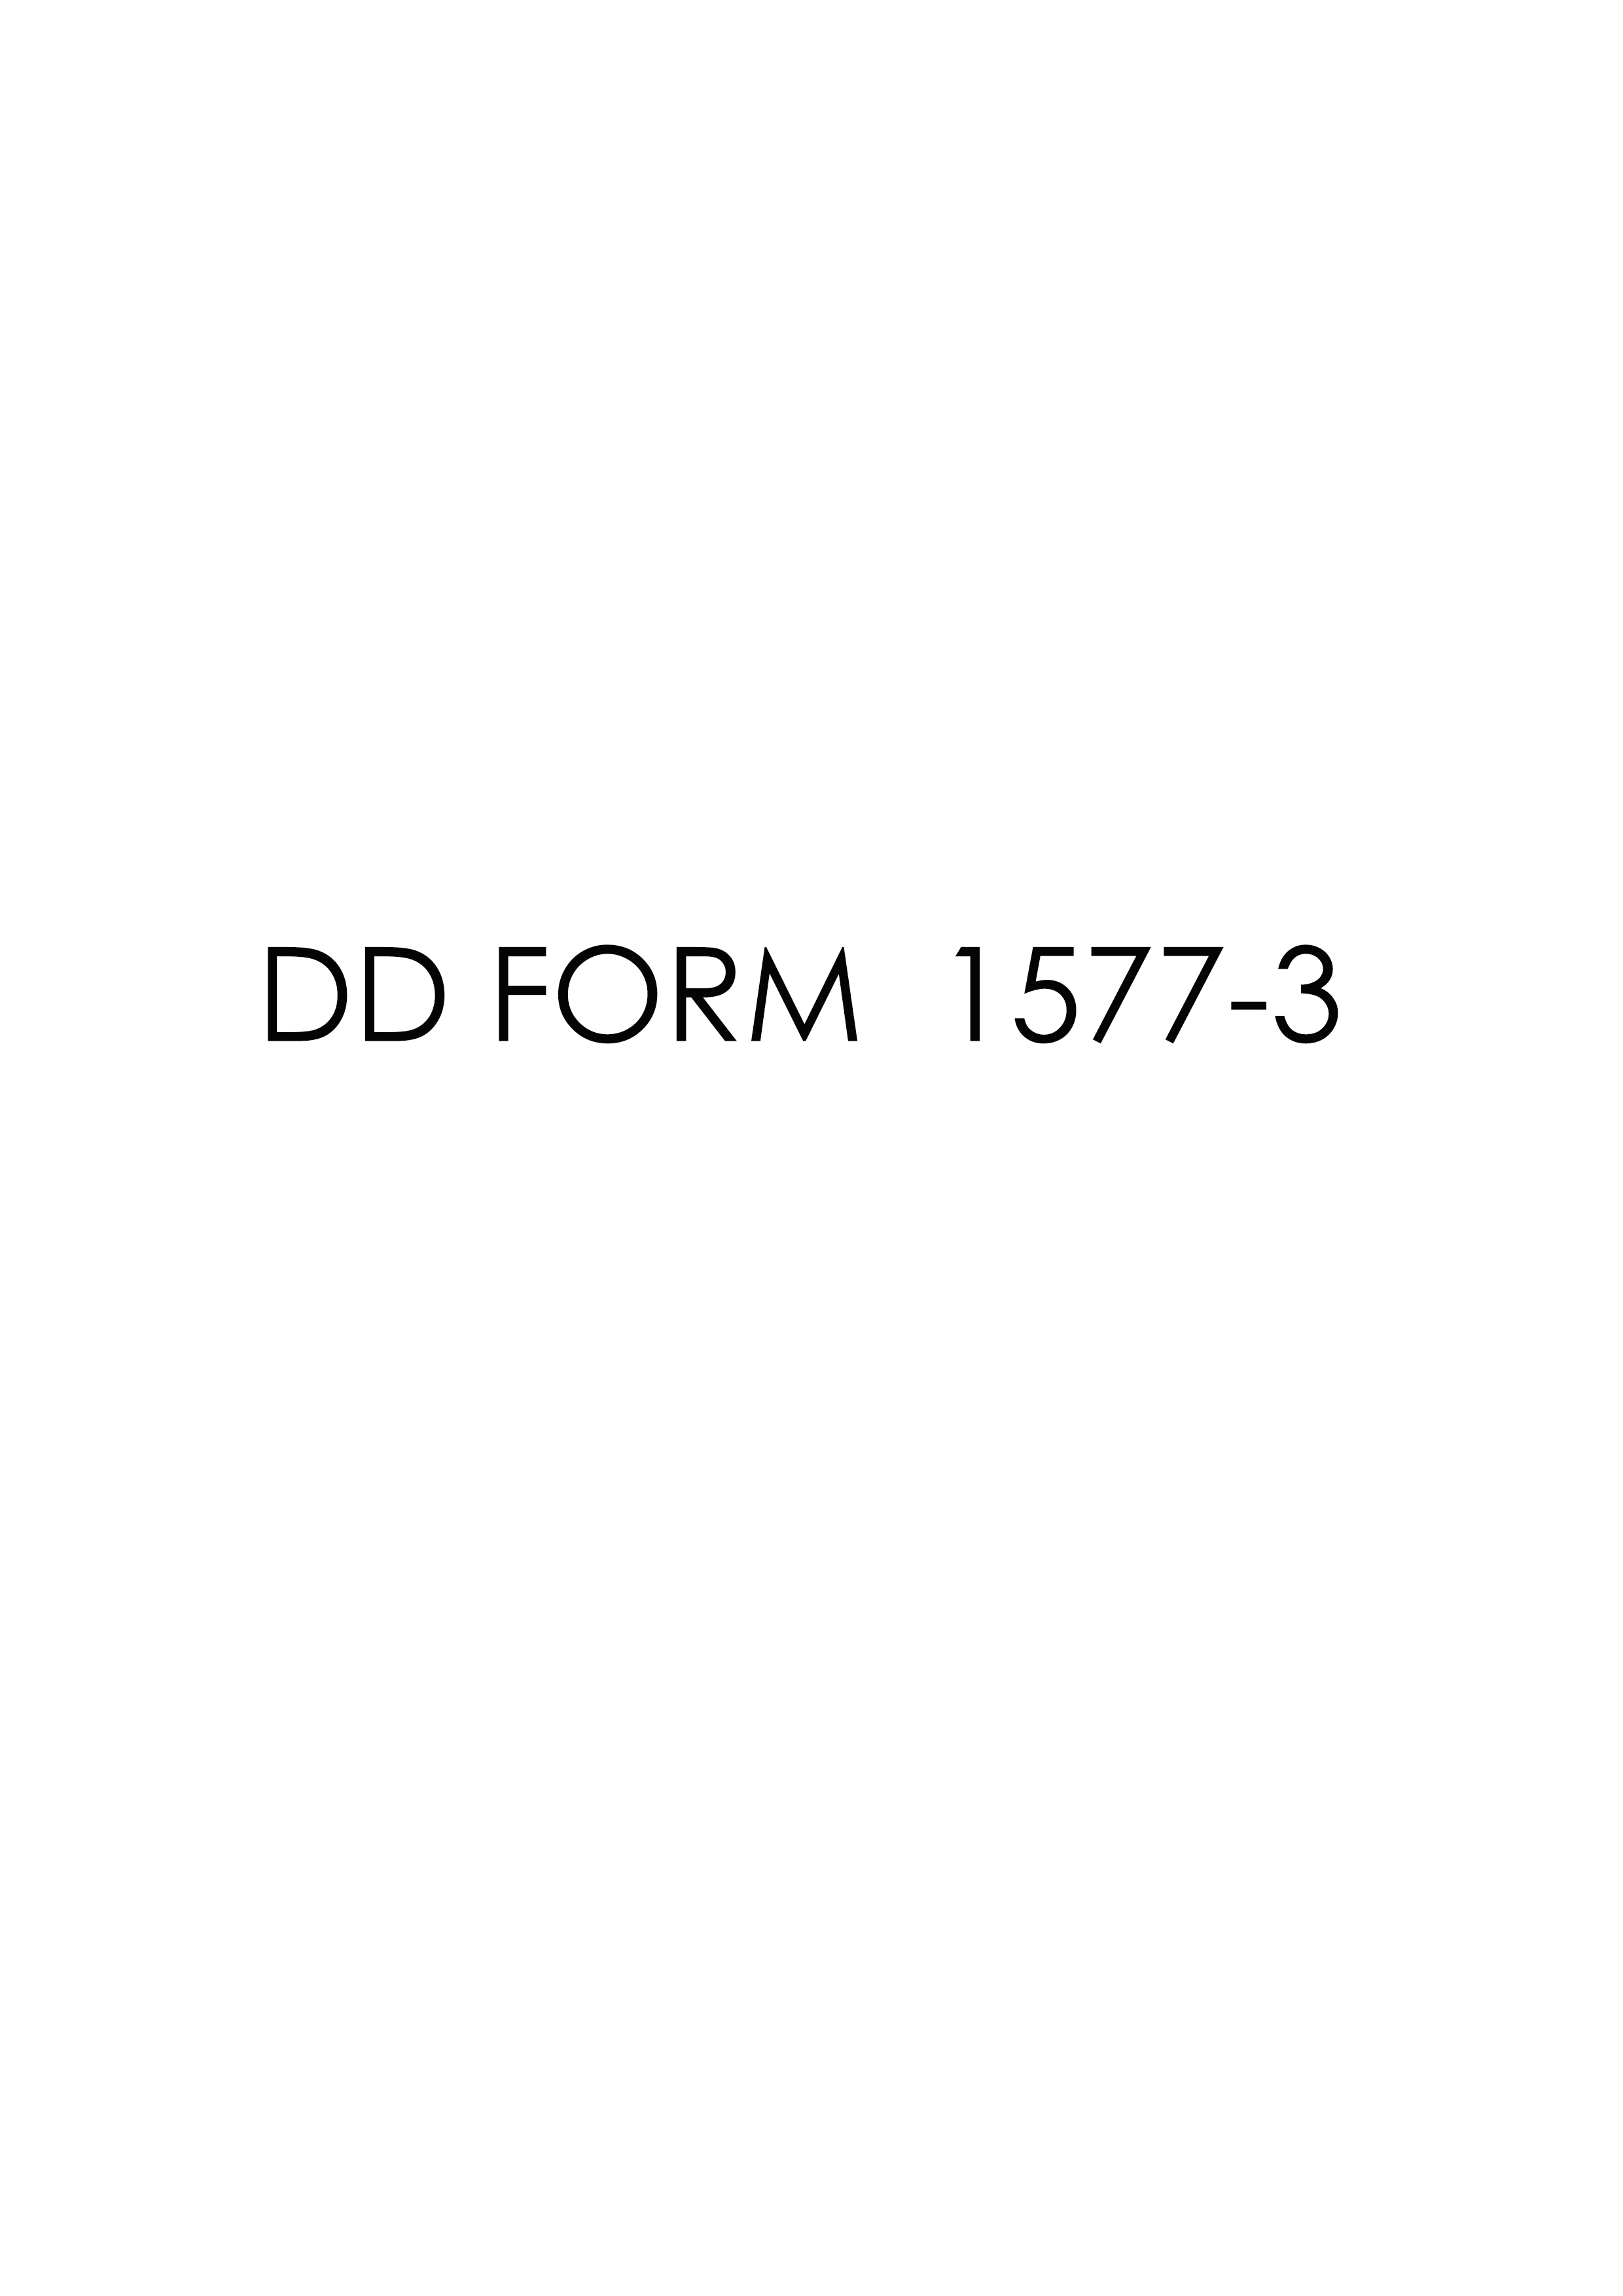 Download dd form 1577-3